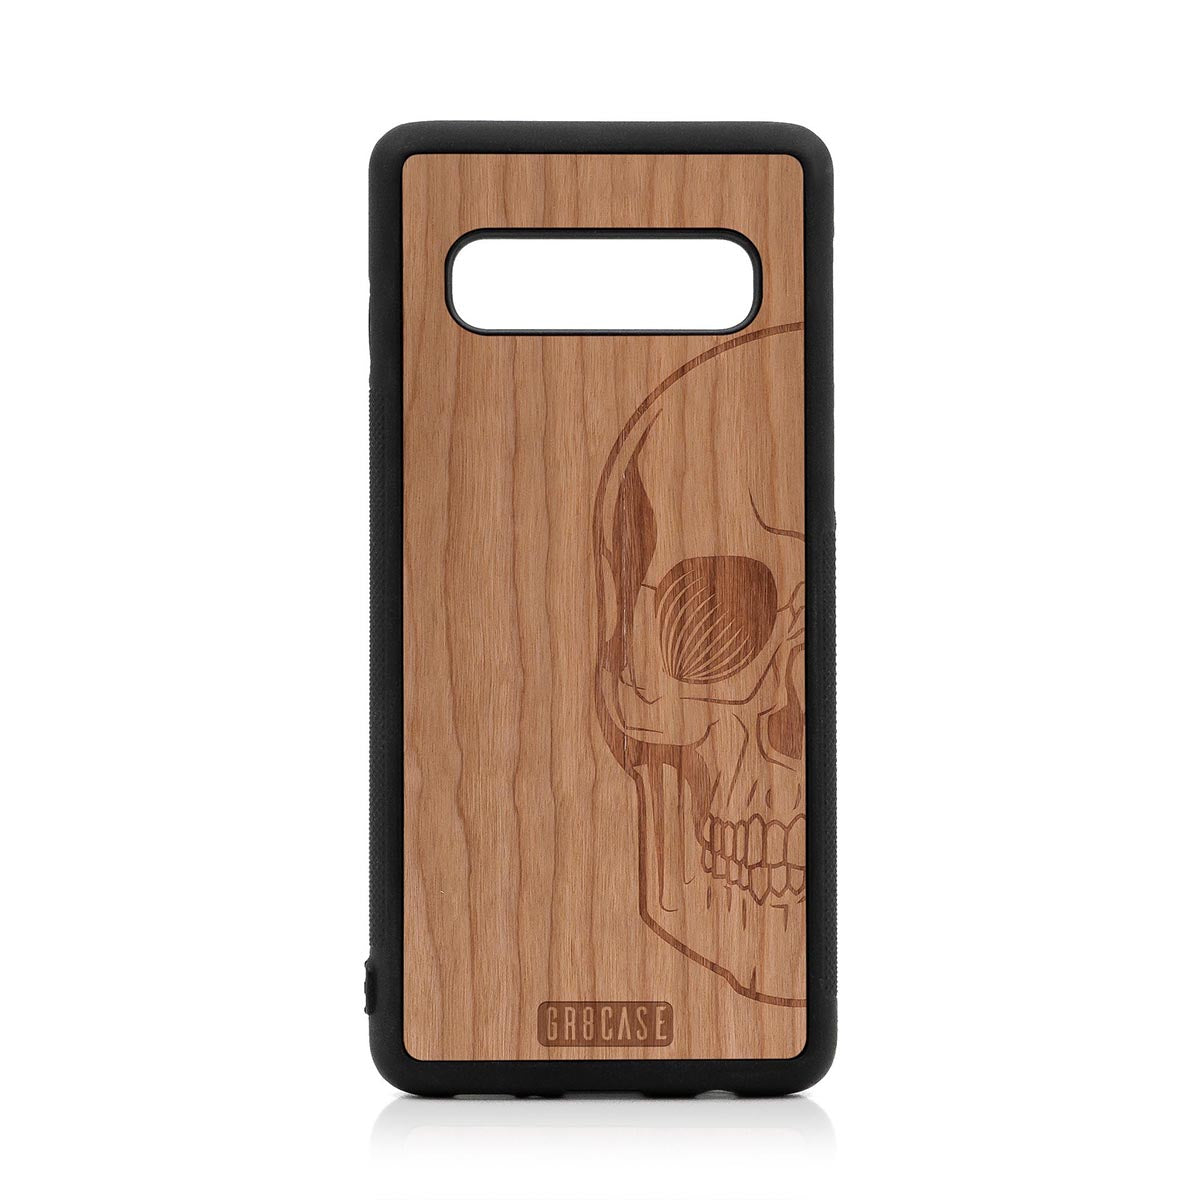 Half Skull Design Wood Case For Samsung Galaxy S10 by GR8CASE